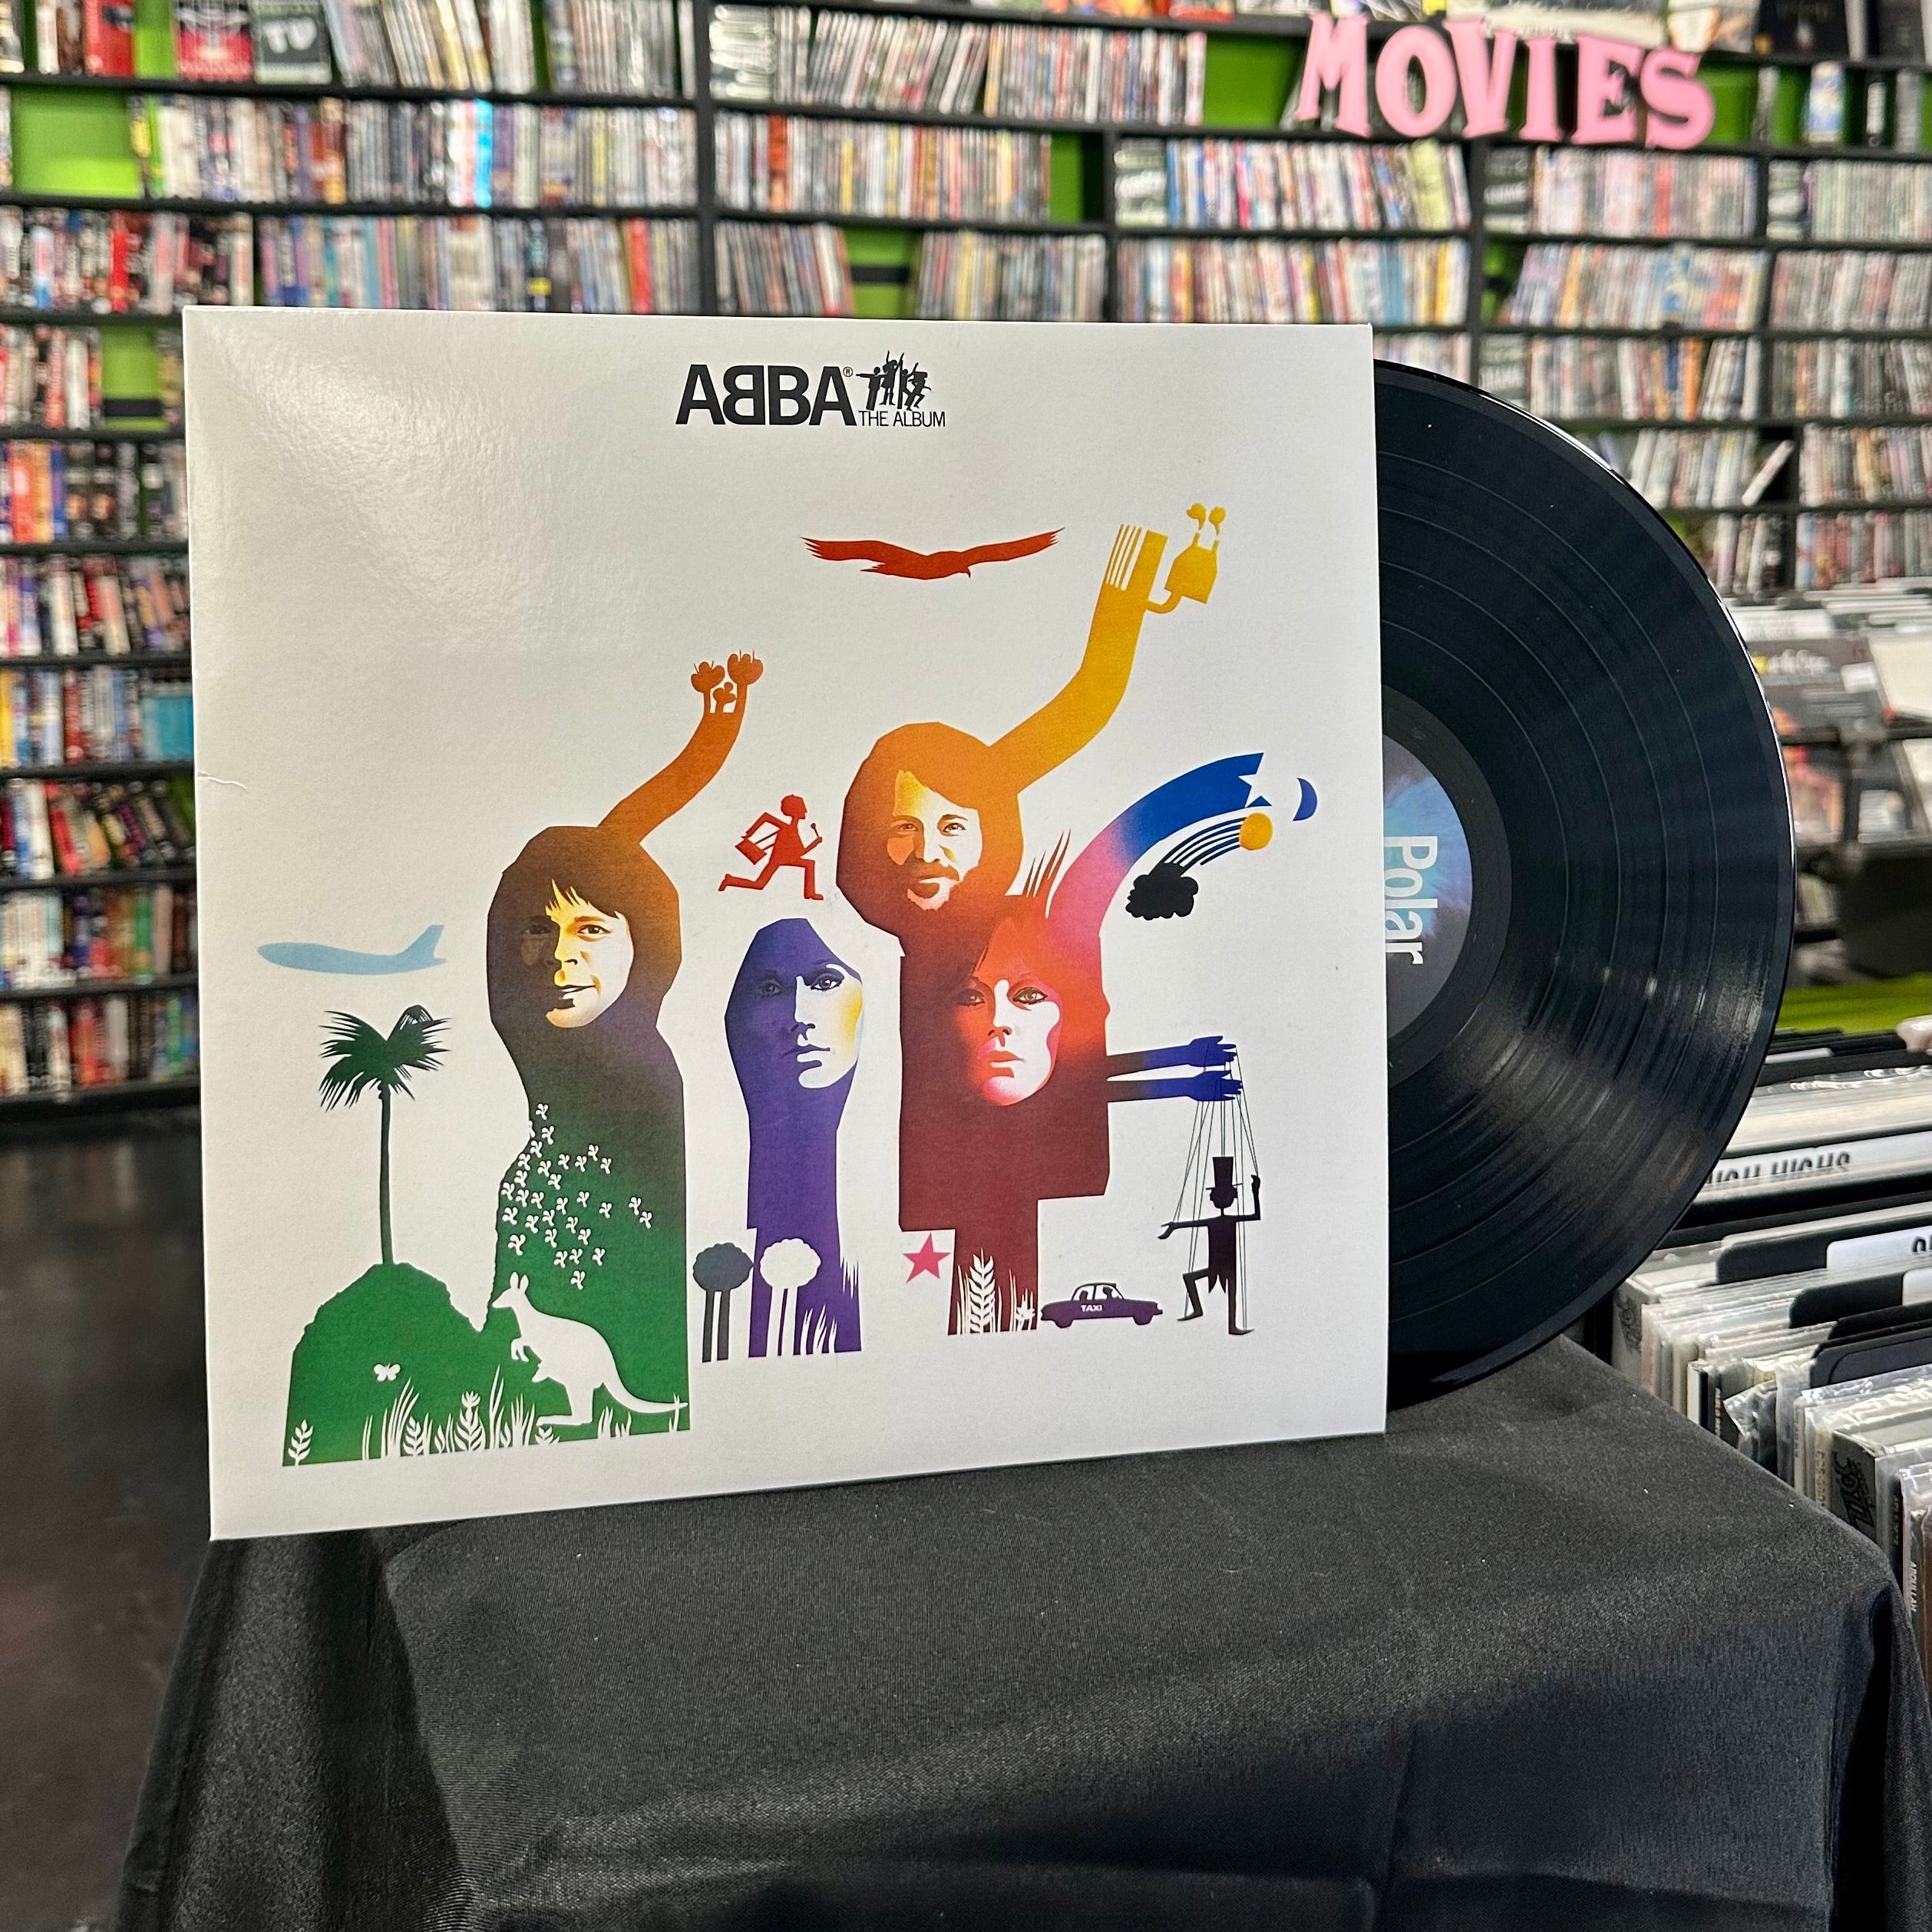 ABBA- Vinyl Album Box Set - Darkside Records